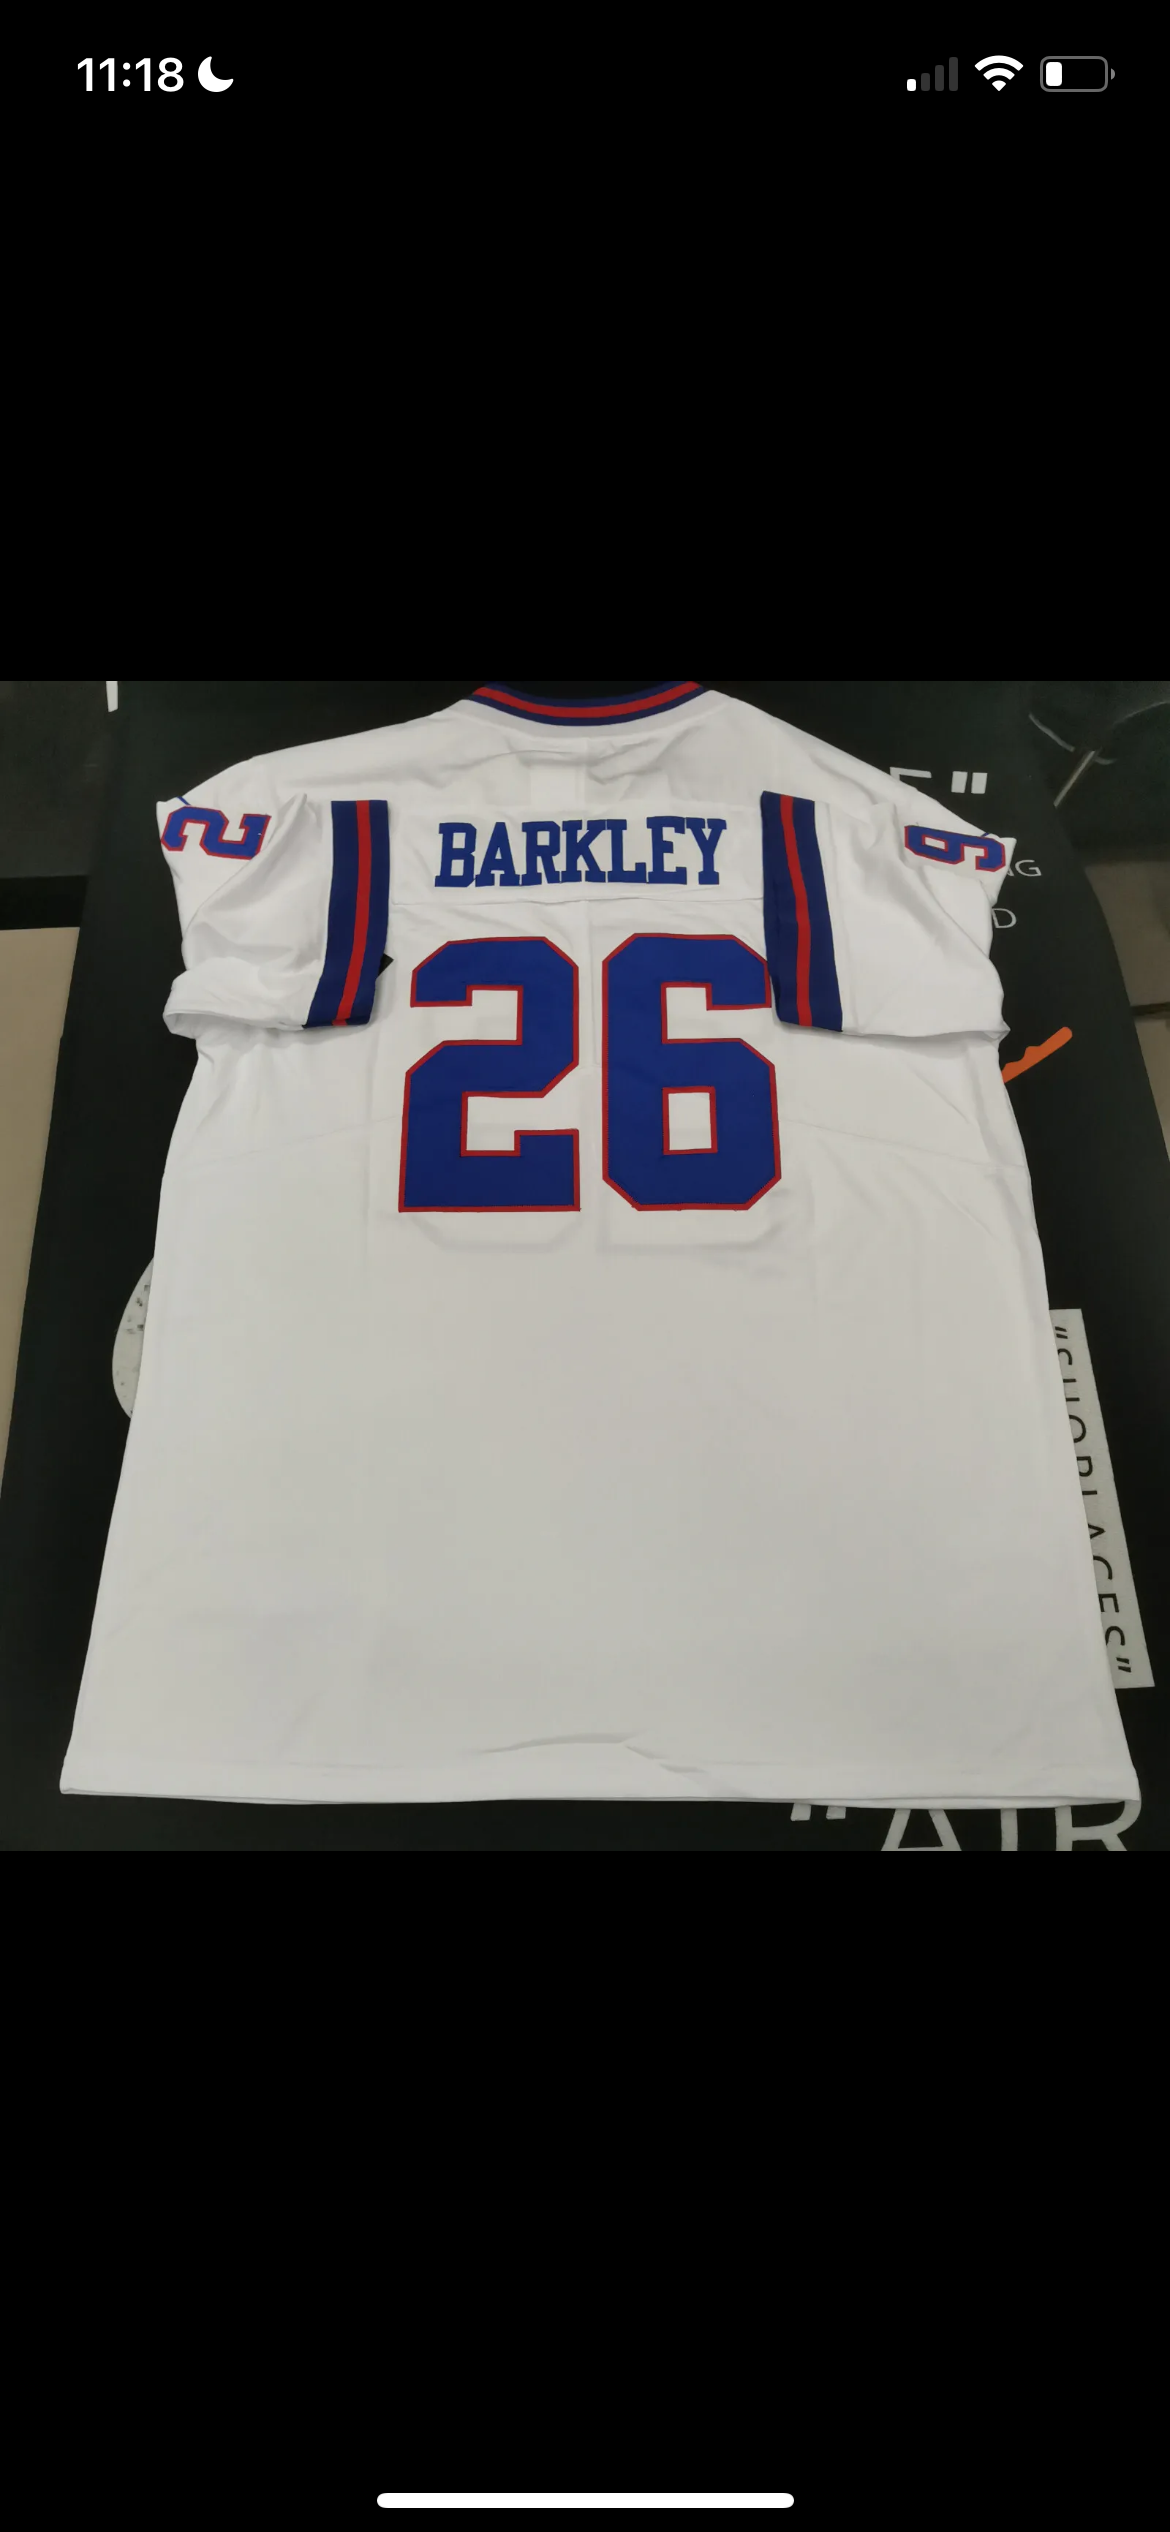 Saquon Barkley New York Giants Alternate Throwback Classic Limited Jersey - White